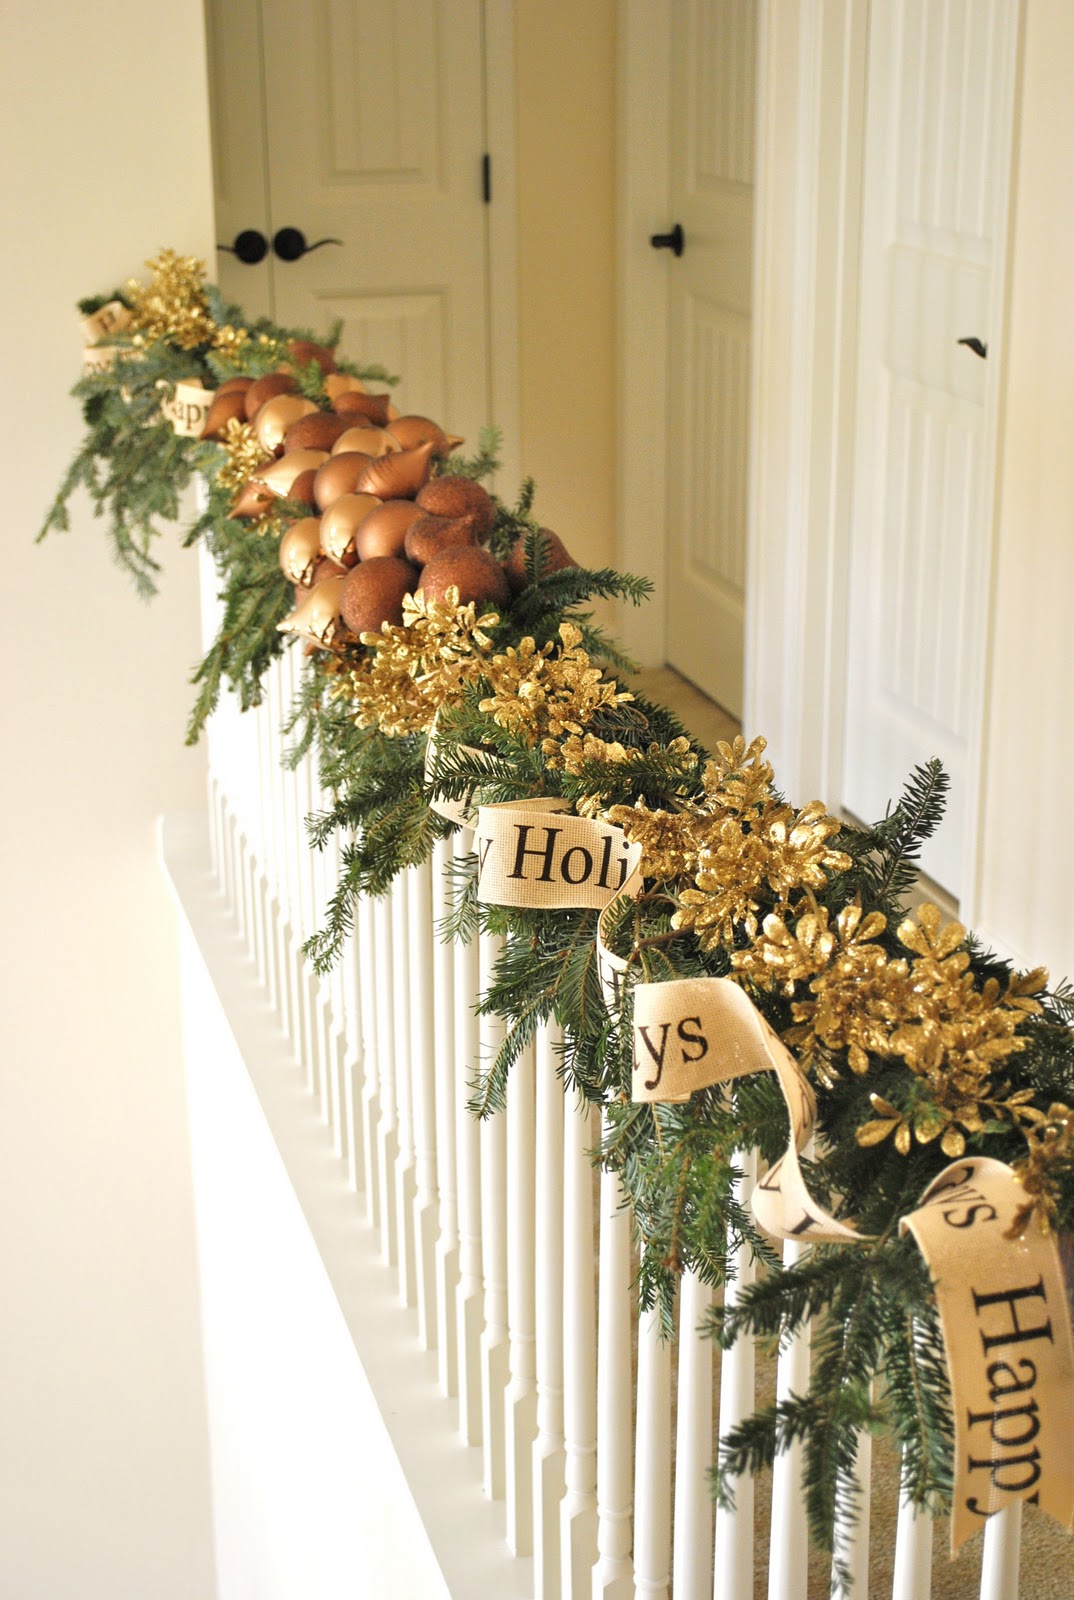 Original holiday decorations